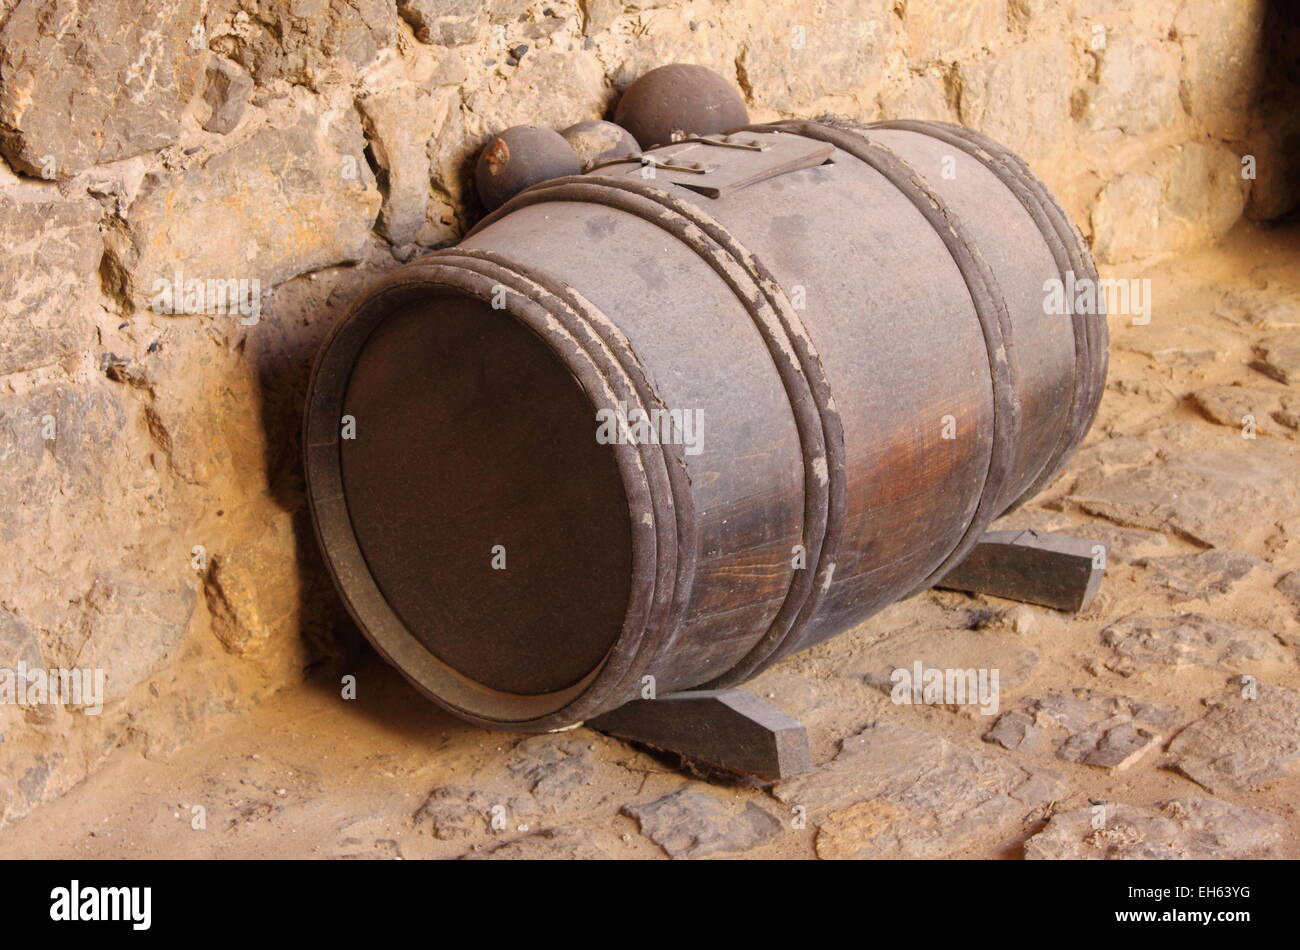 Gunpowder barrel with a clipping path Stock Photo